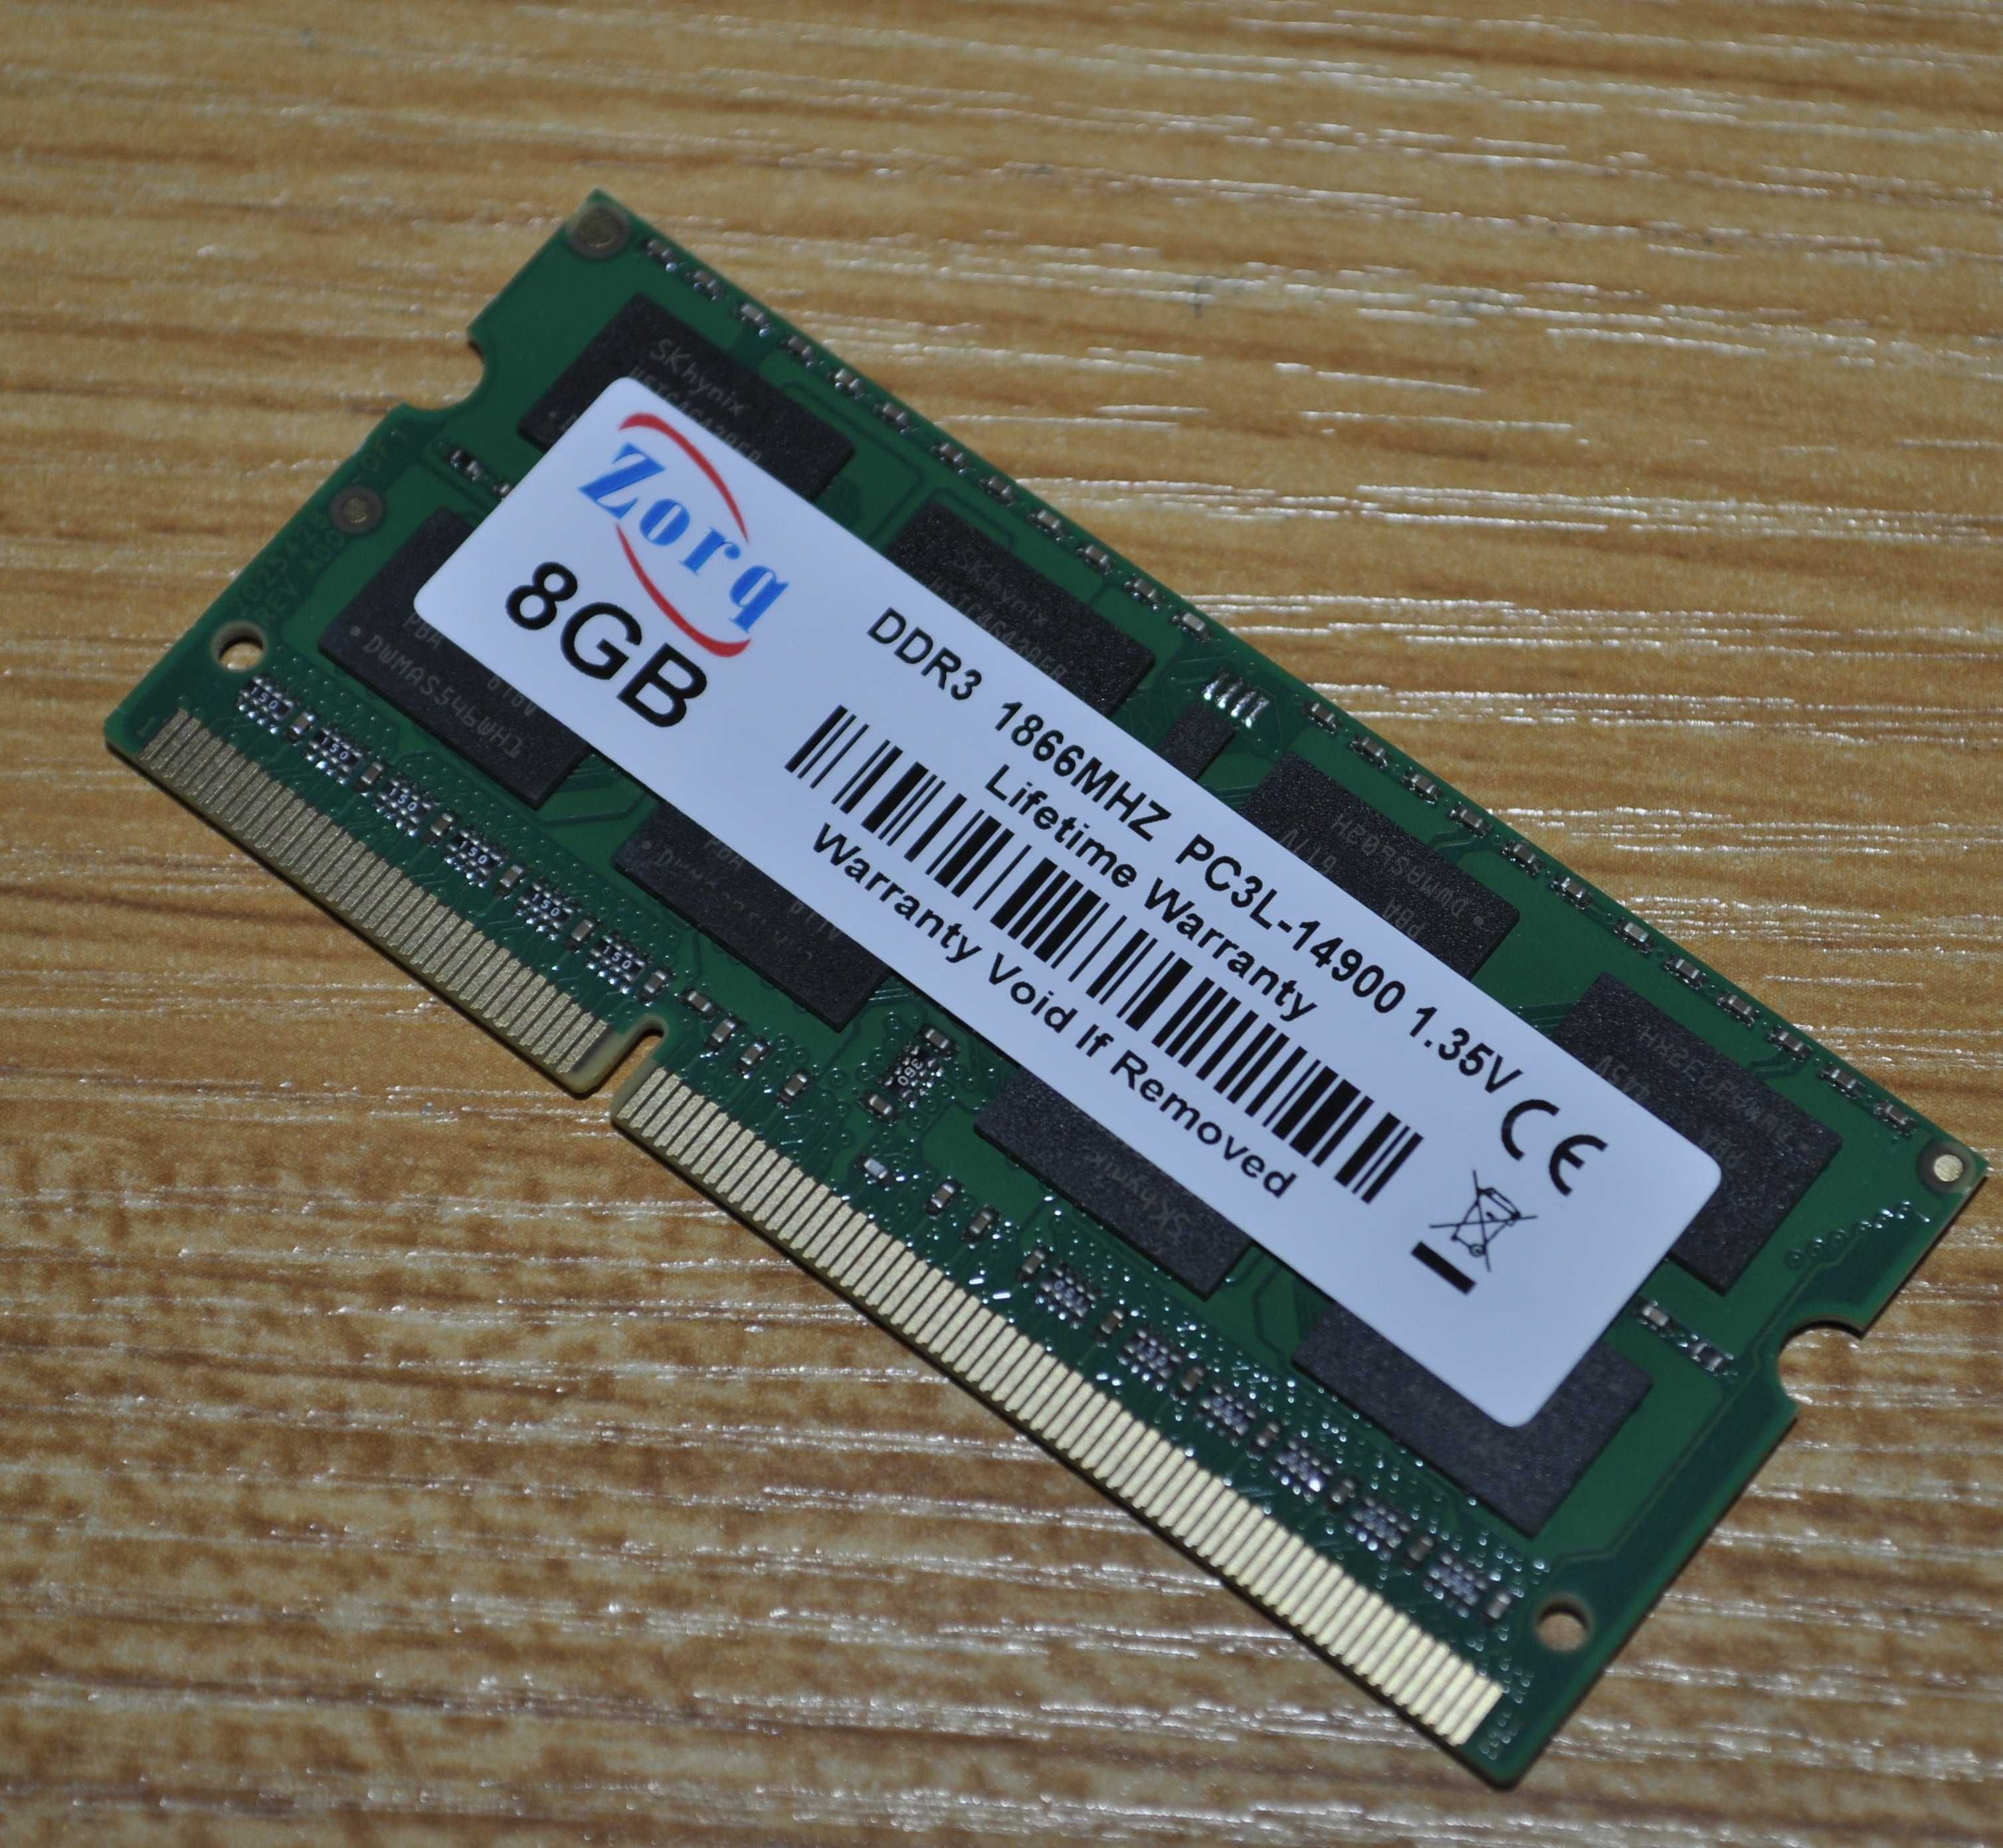 НОВА память для ноутбука - DDR3 8GB 1866 1.35v